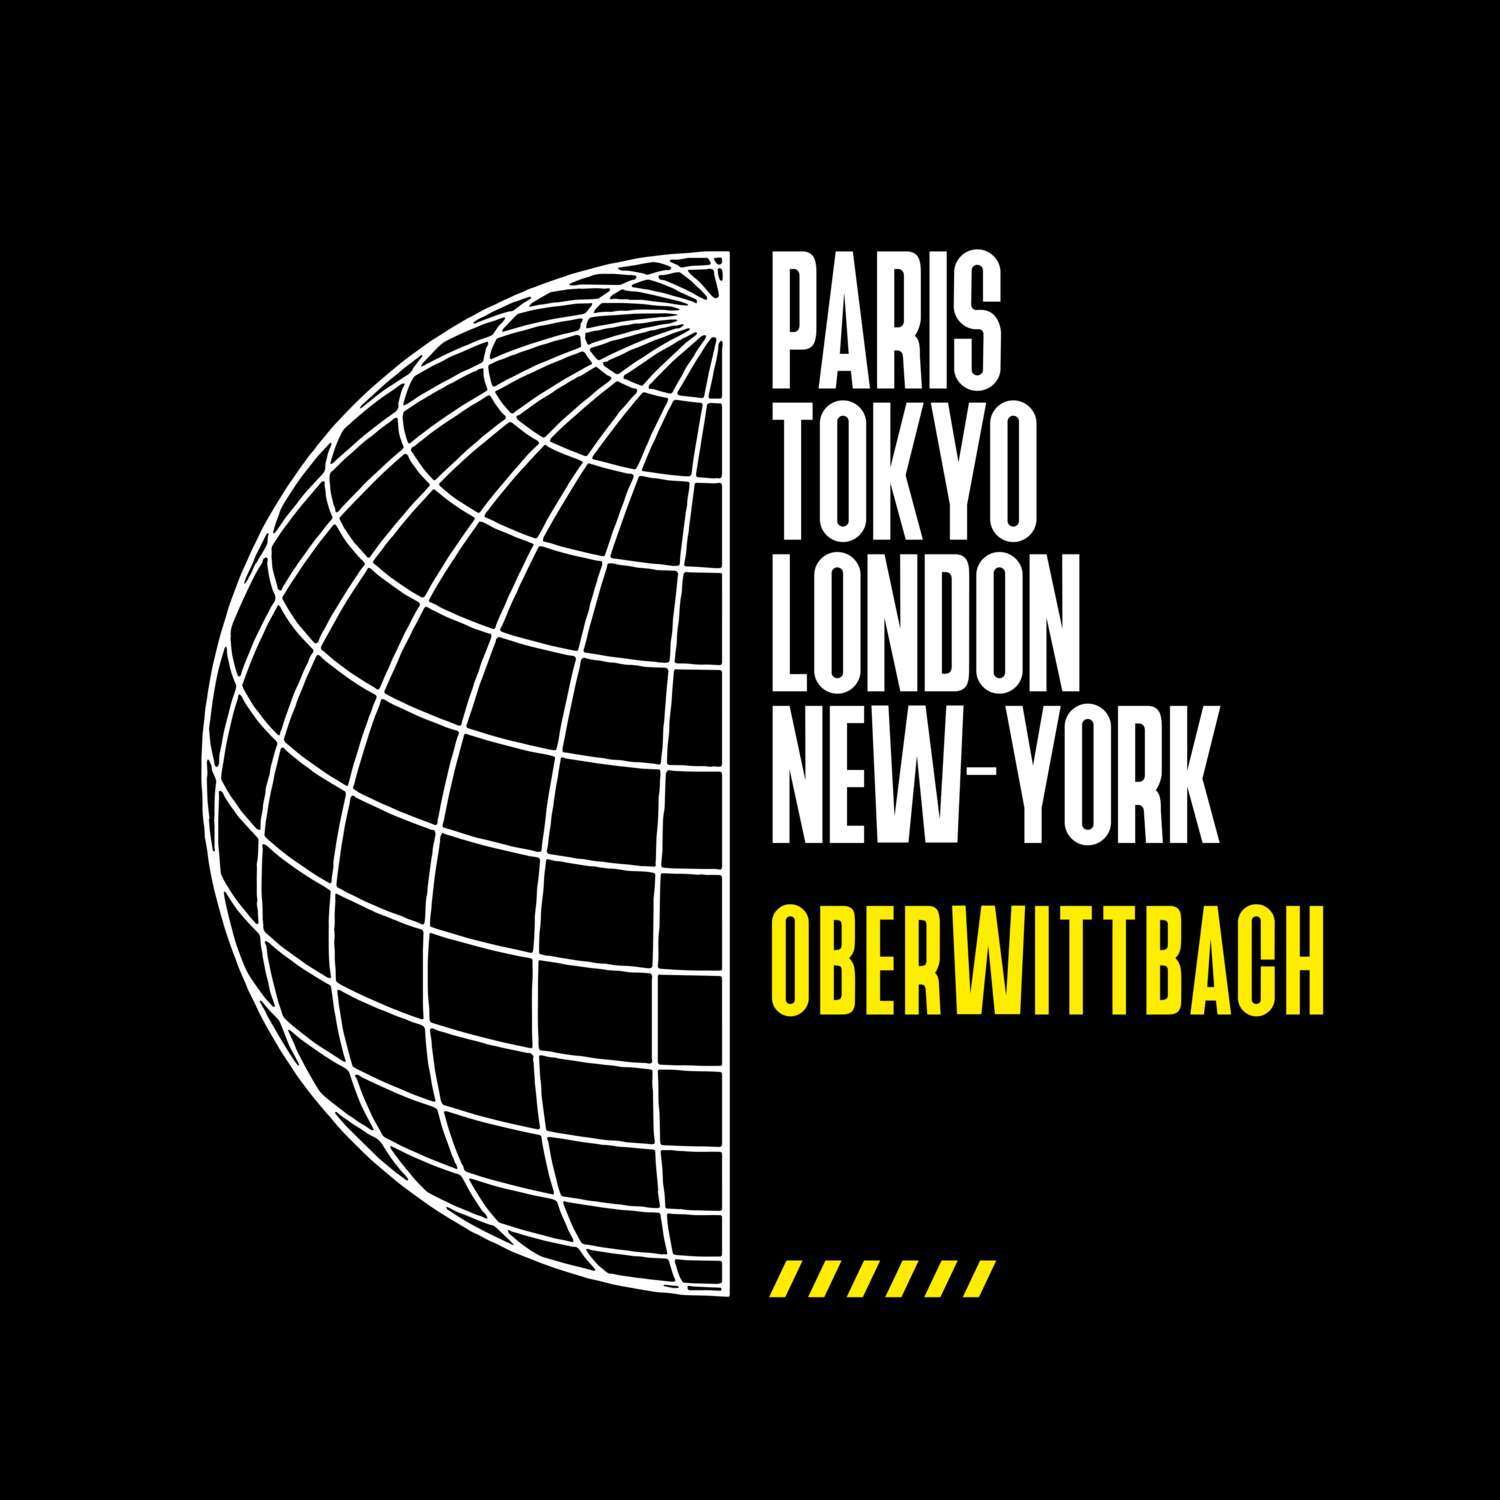 Oberwittbach T-Shirt »Paris Tokyo London«